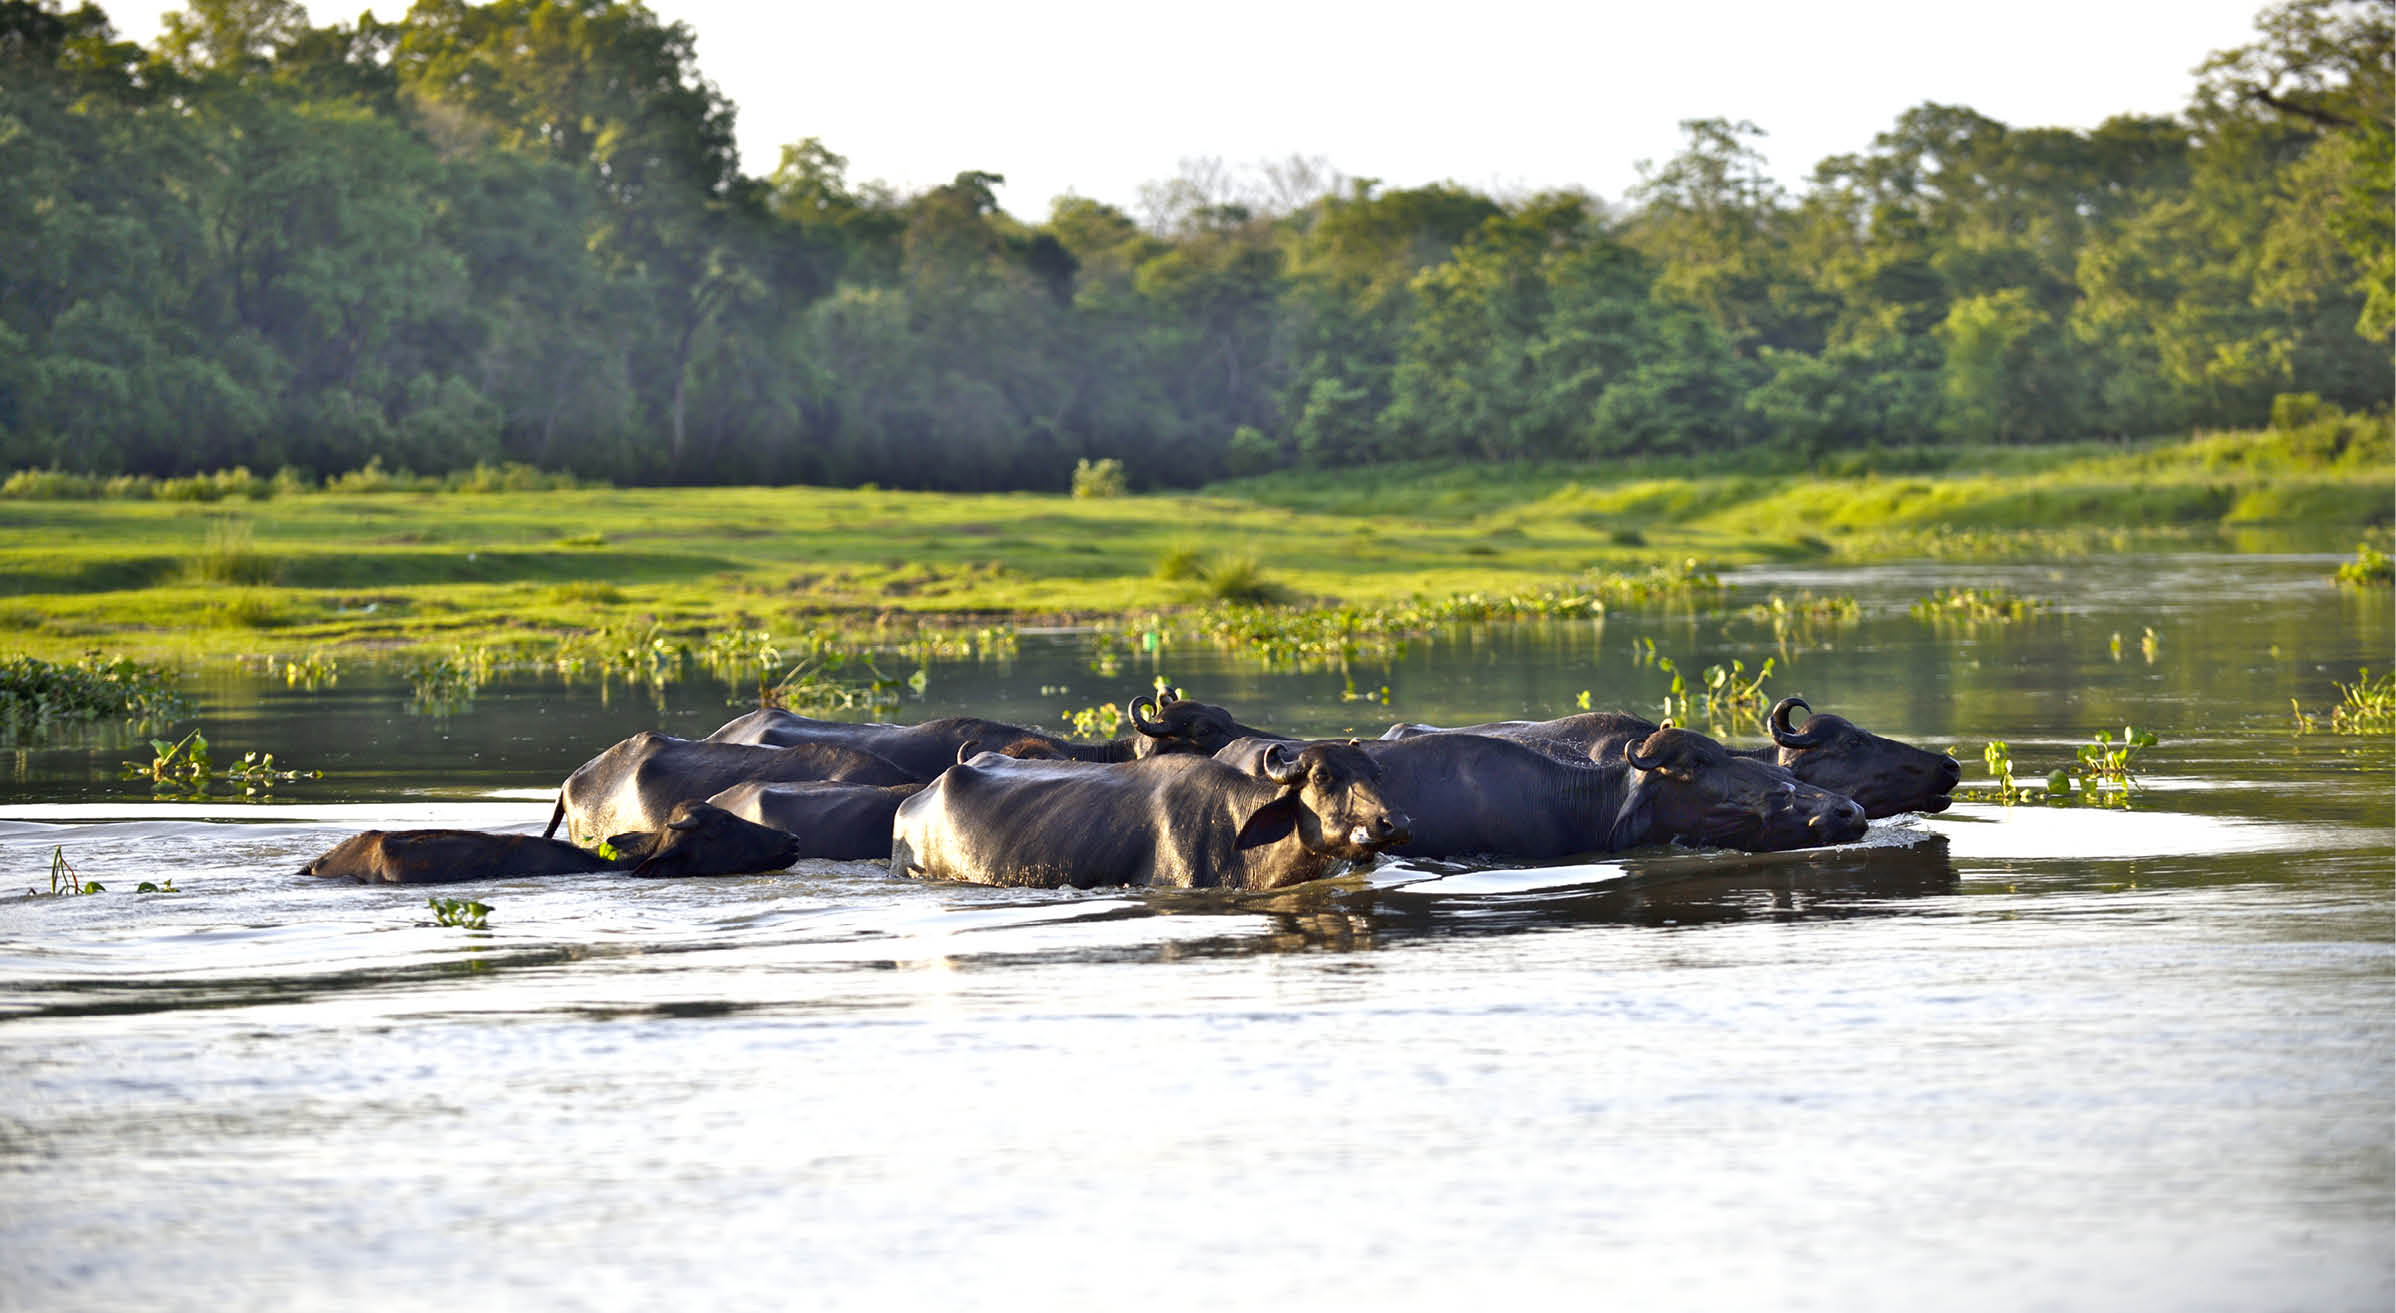 Water buffalos swimming across the river, Chitwan National Park, Nepal